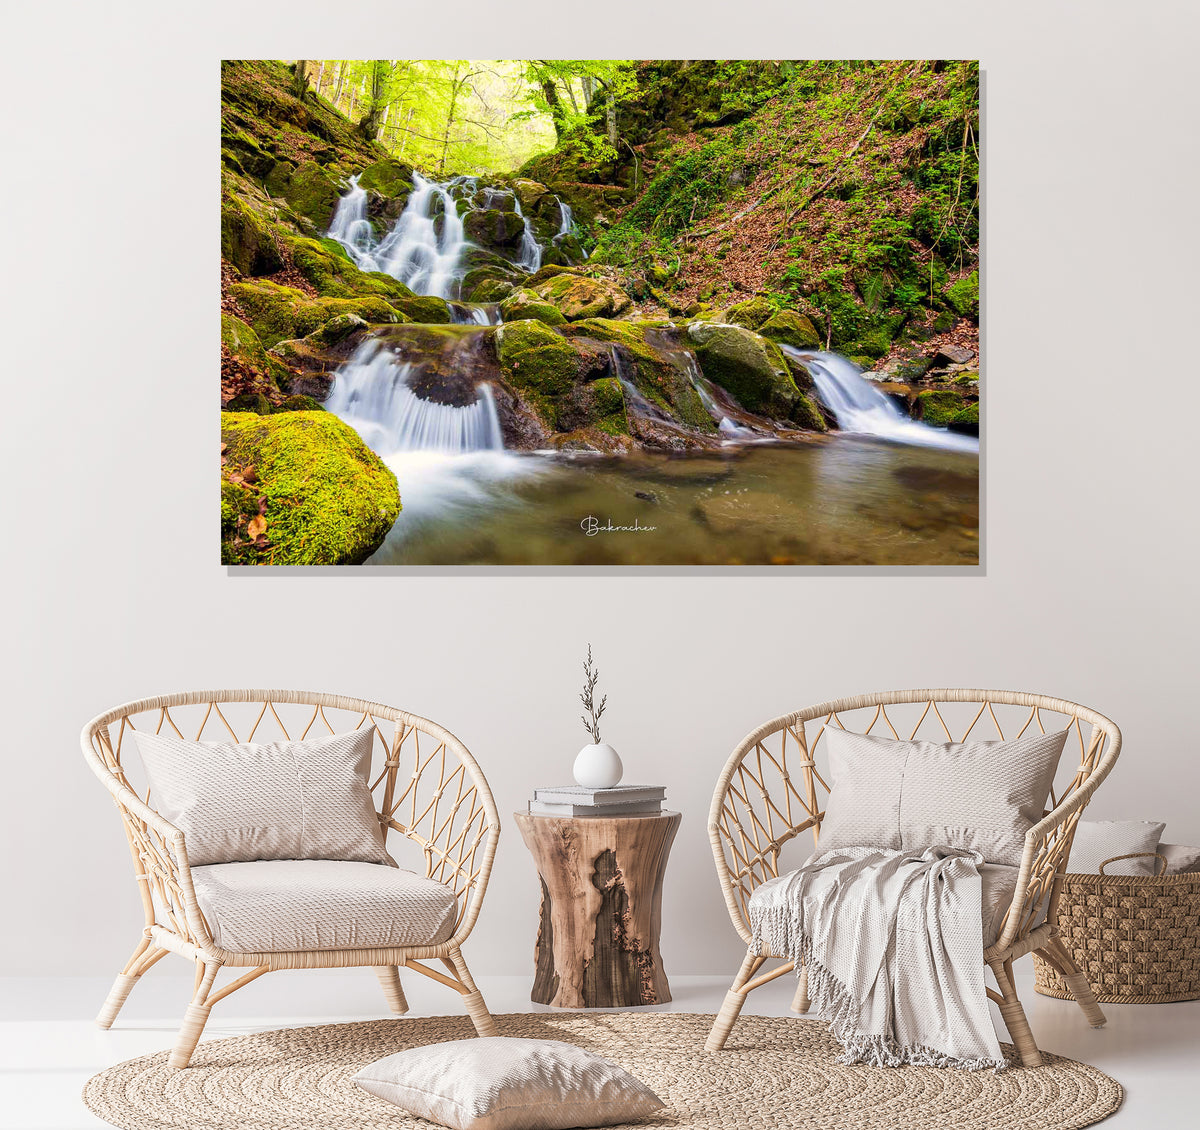 Mountain waterfall nature photography wall art print- photo wall decor- a Waterfall near Teteven town in the Balkan Mountain- Bulgarian landscape